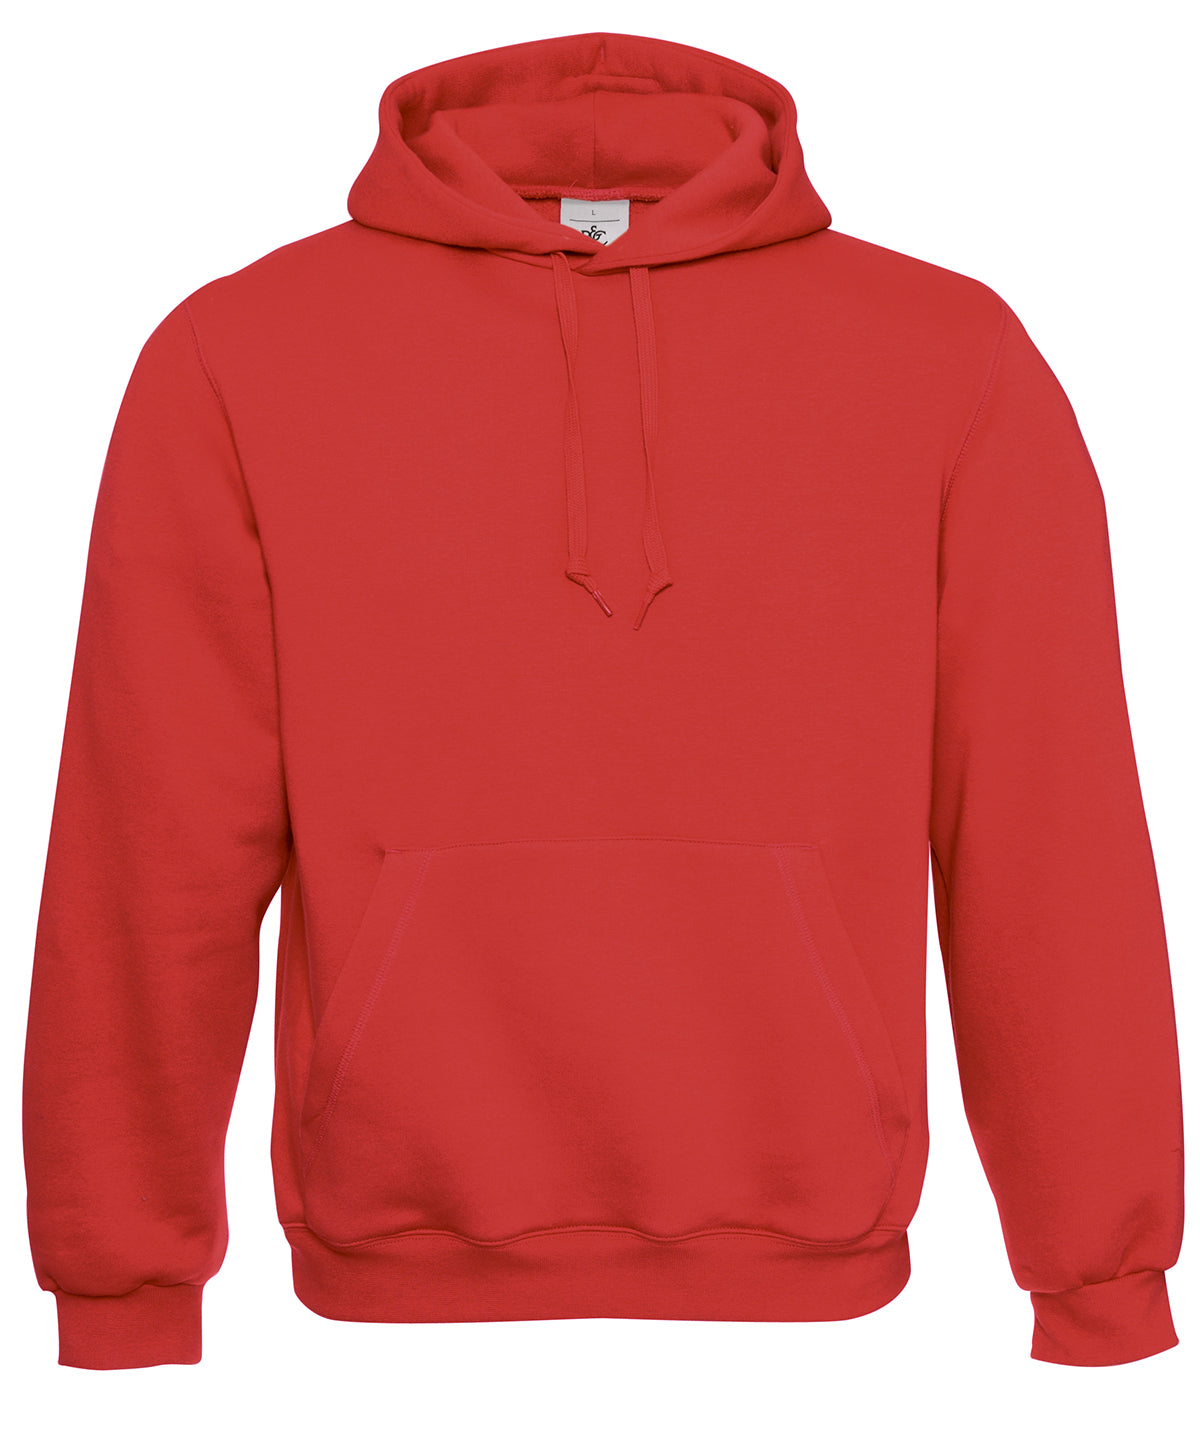 Hettupeysur - B&C Hooded Sweatshirt